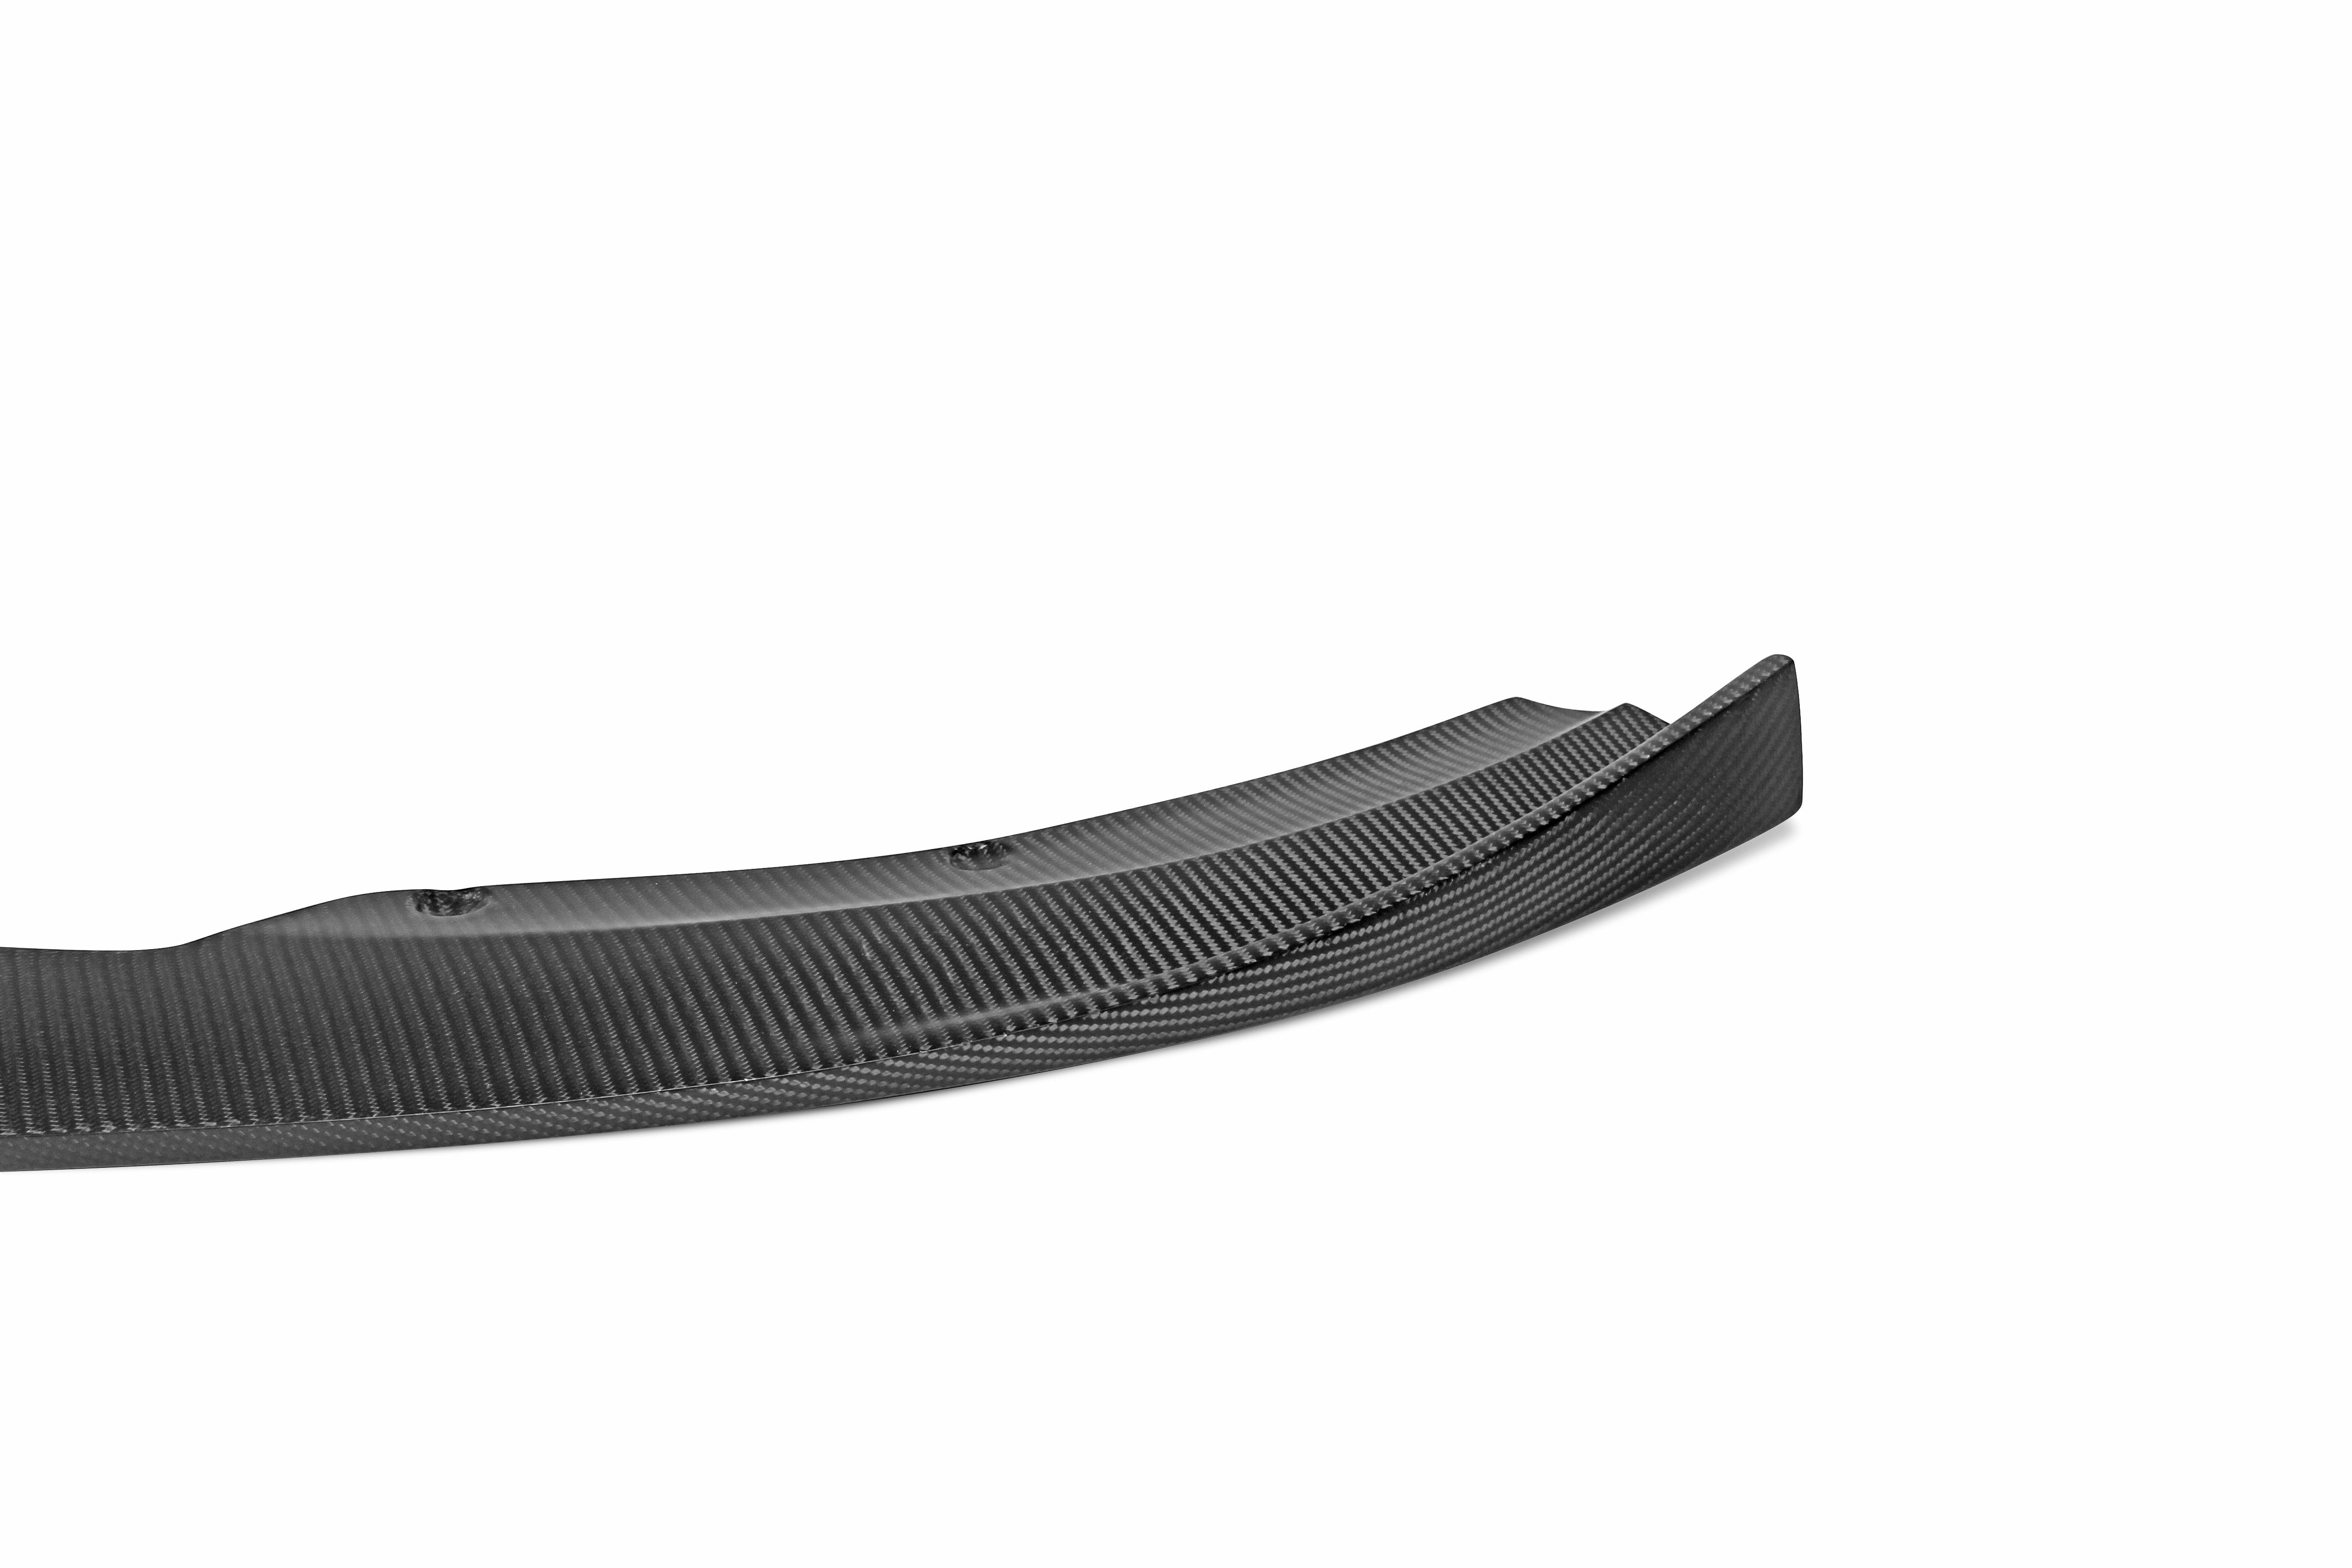 Ventus Veloce Carbon Fiber 2016 2017 2018 Focus RS Lower Front Lip